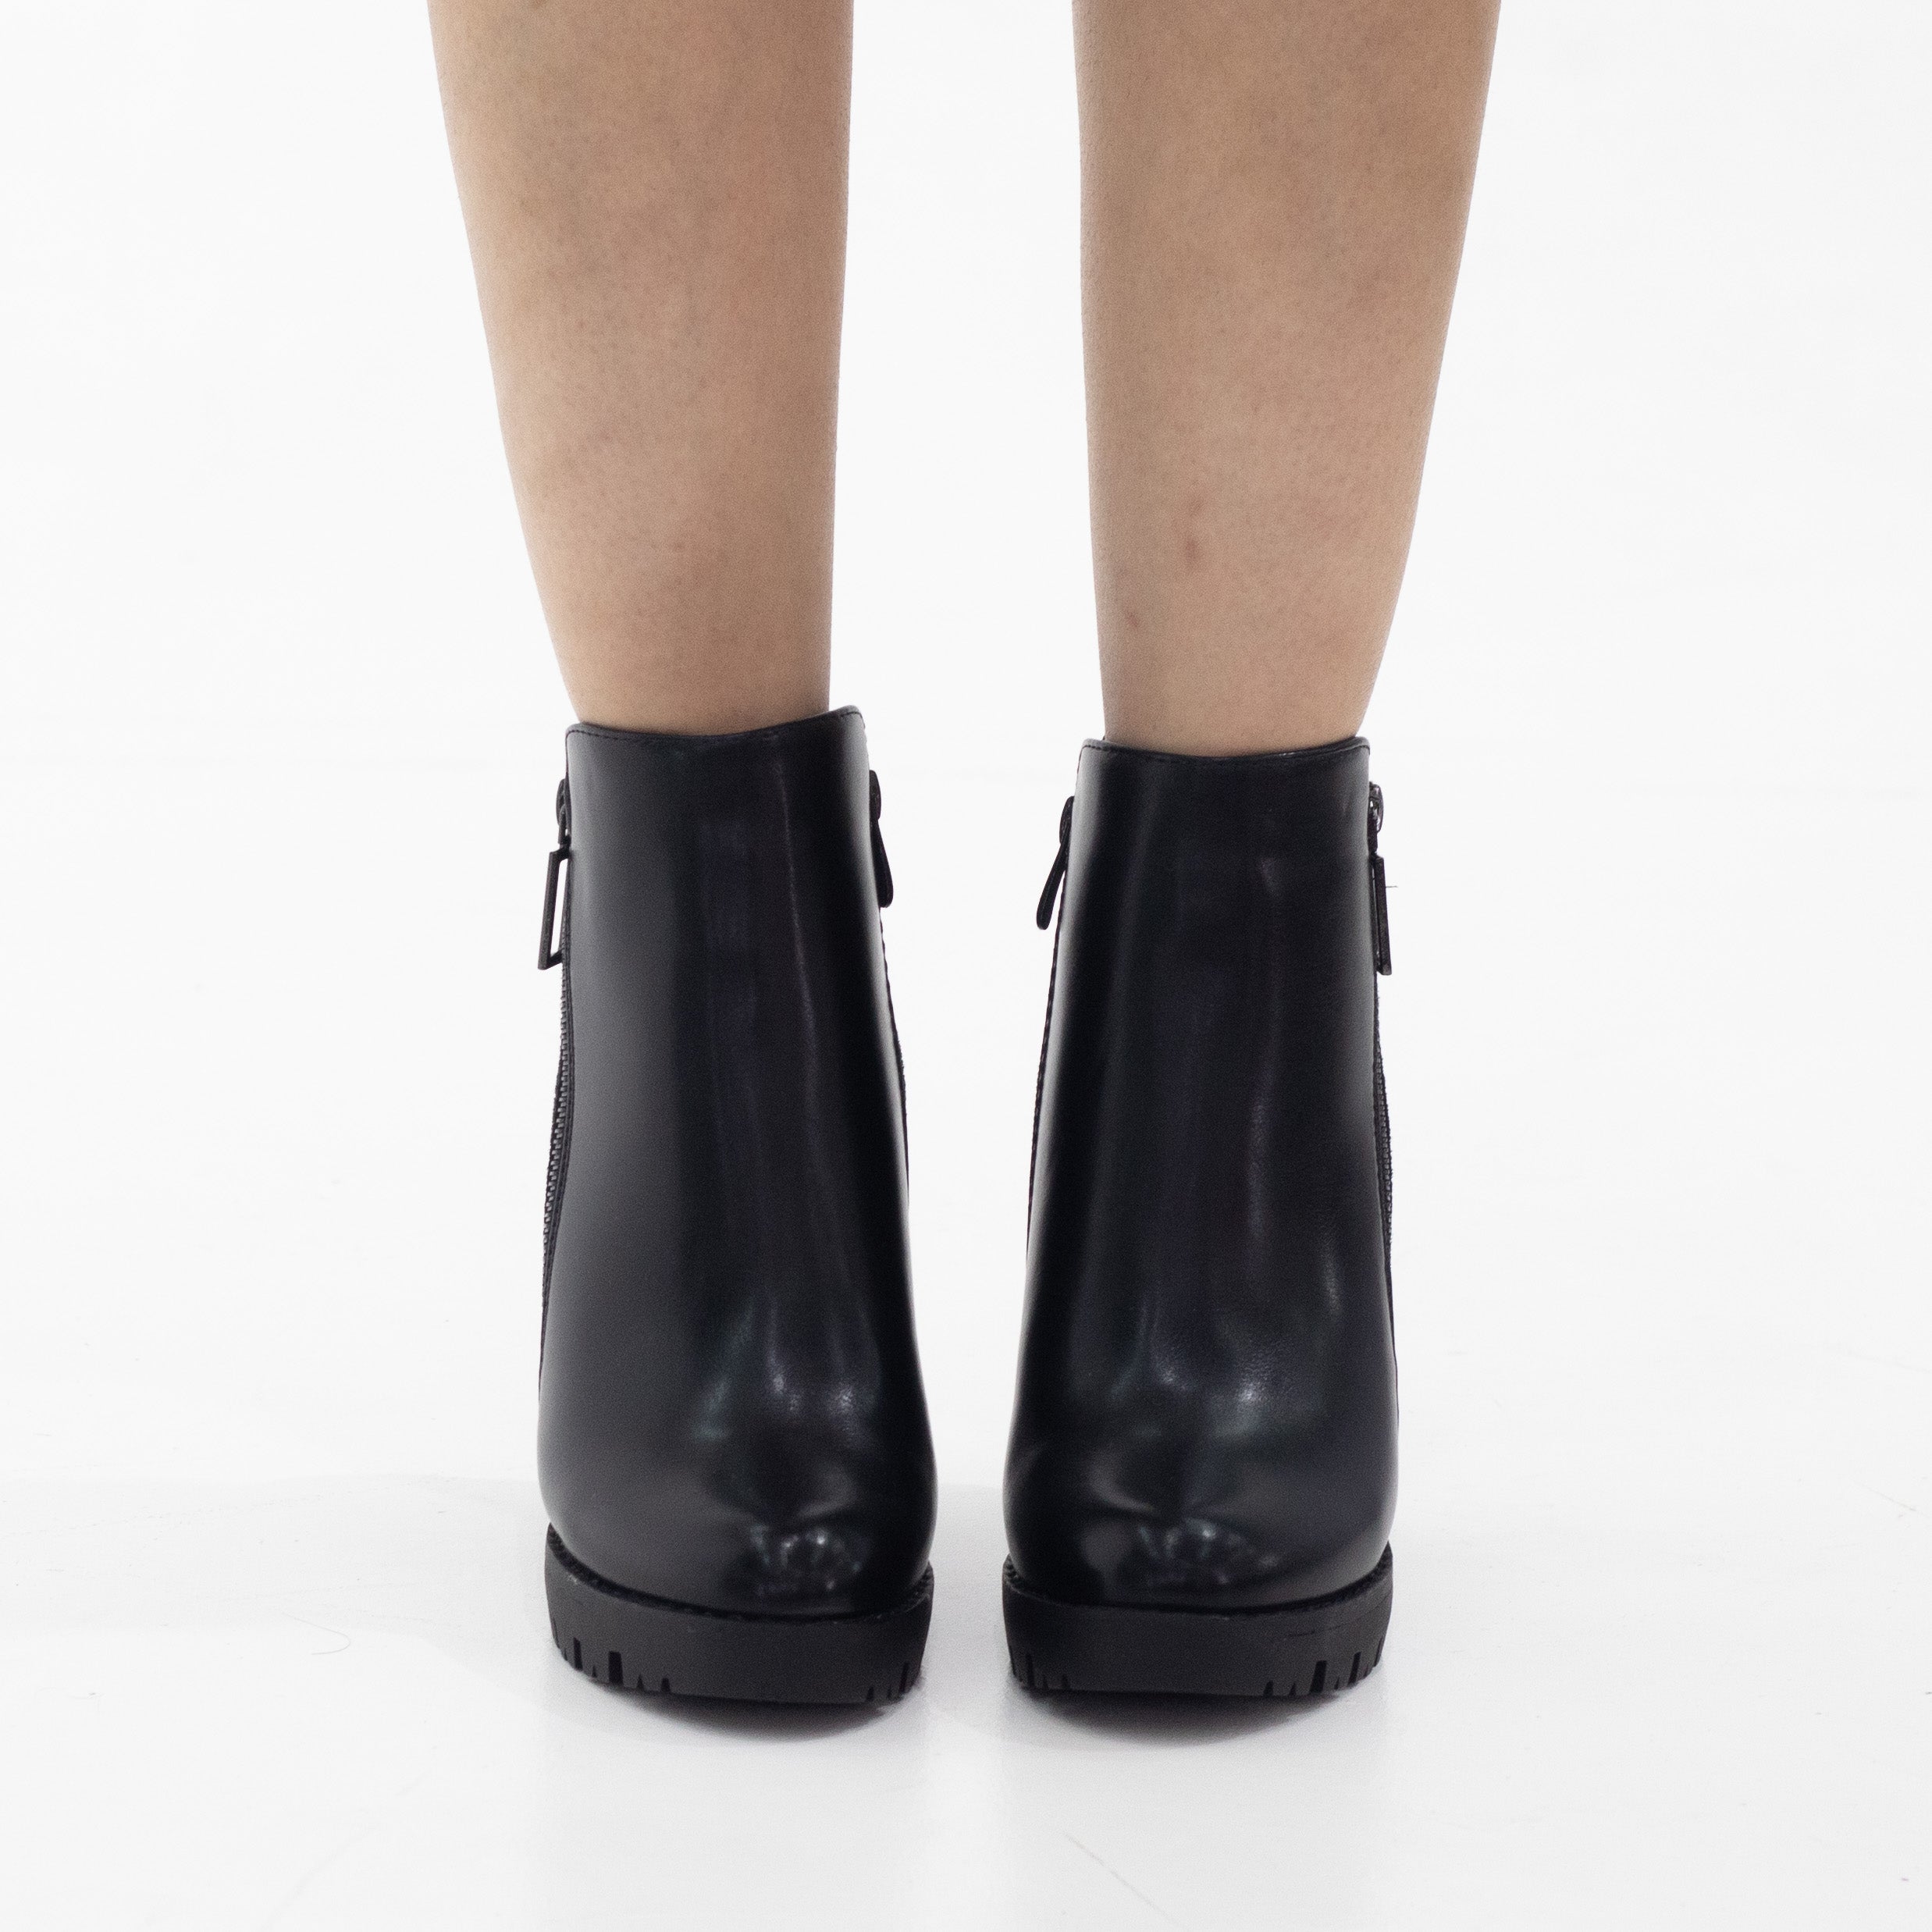 Black 10cm heel side zip ankle boot uplift